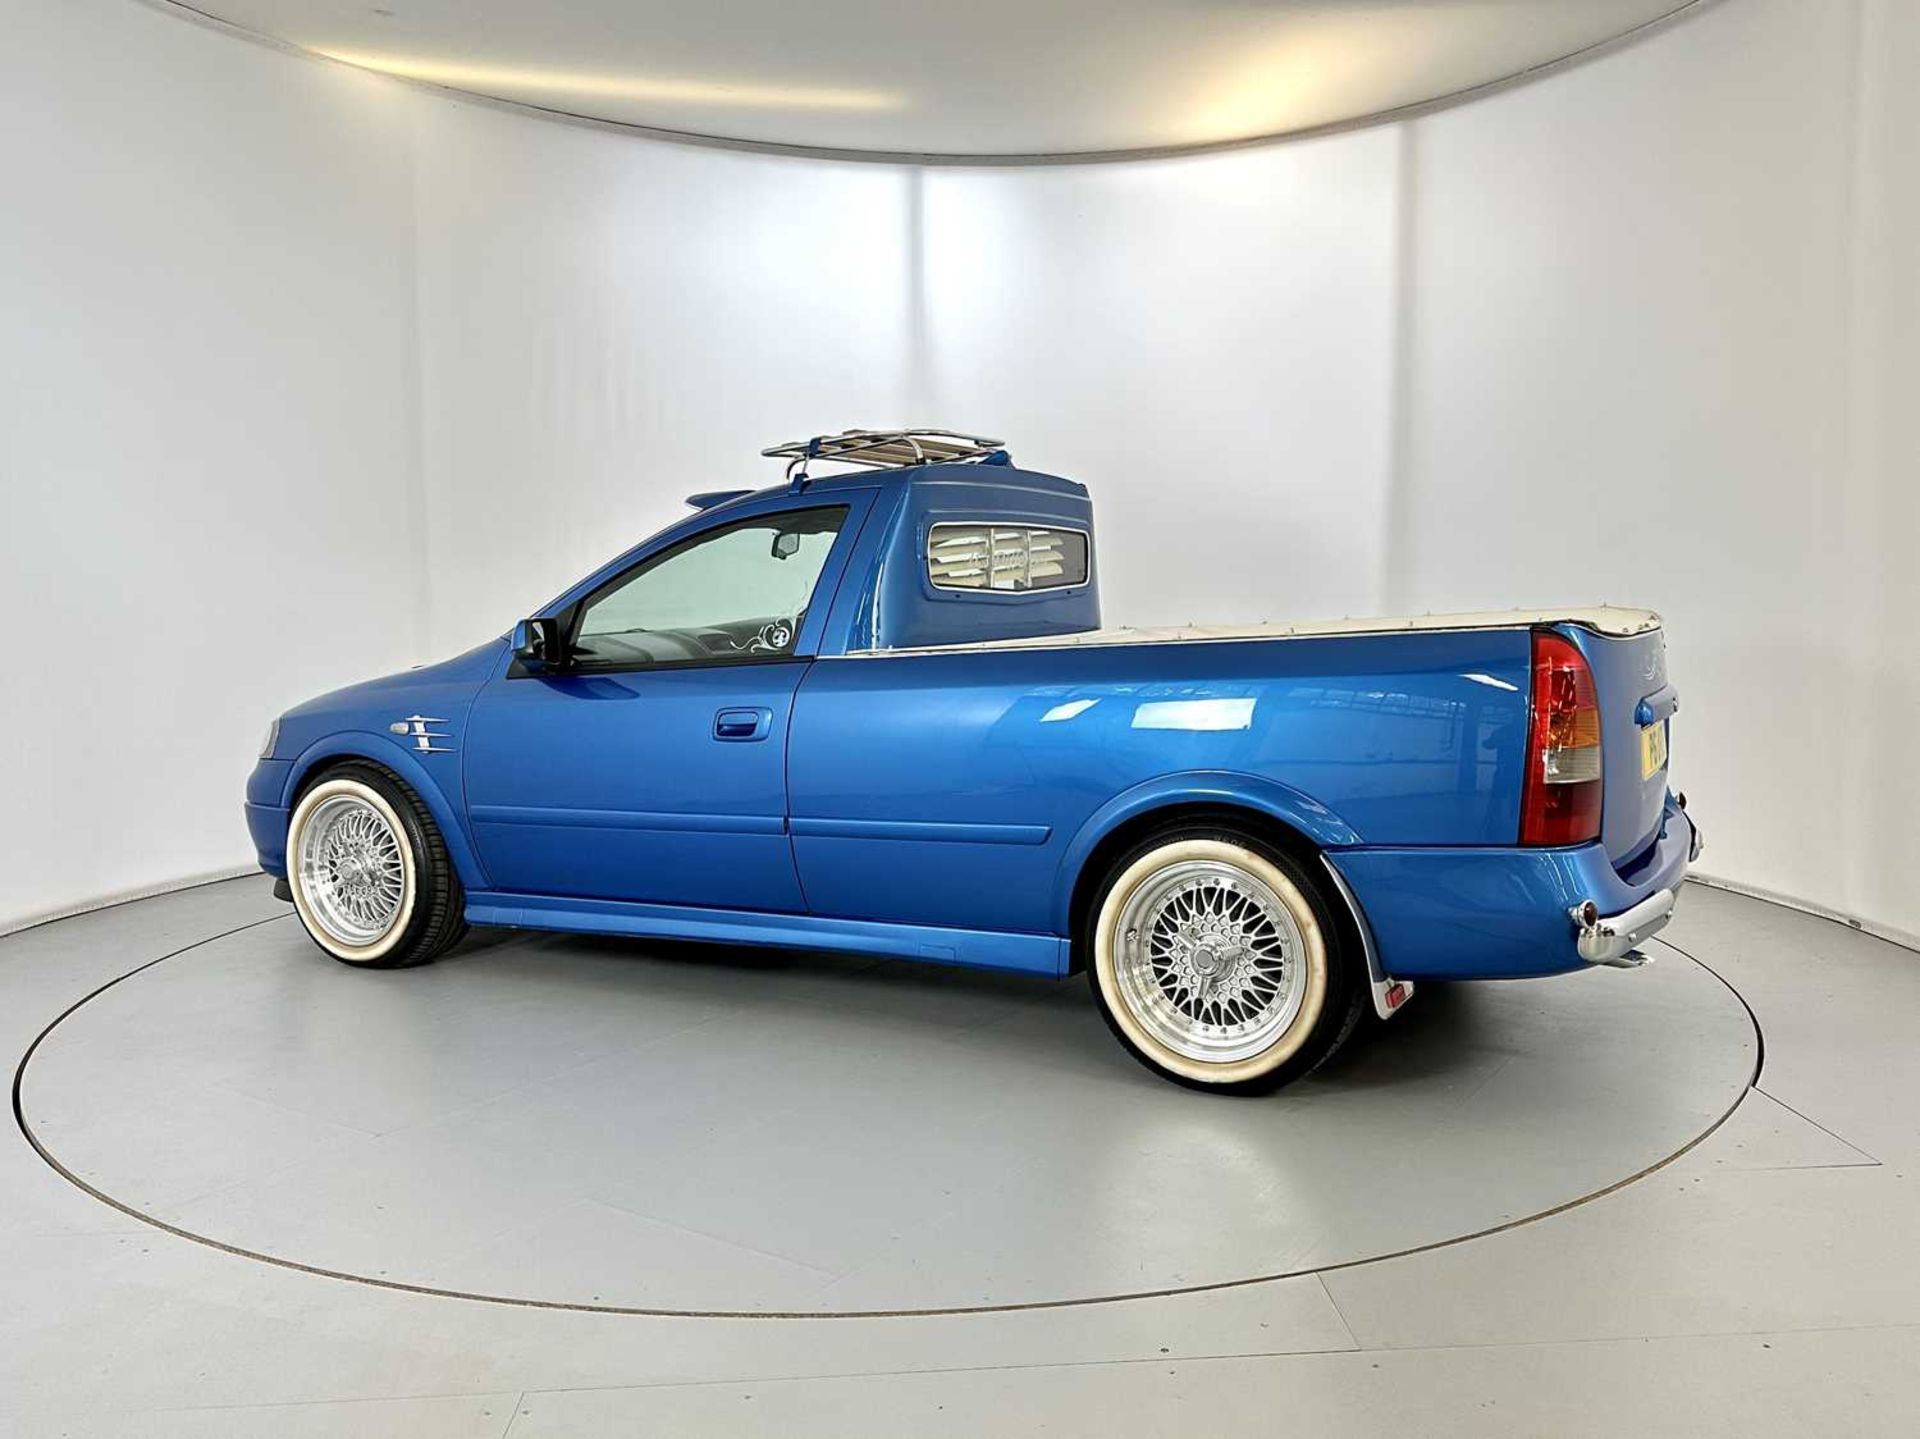 2000 Vauxhall Astra Pickup - Image 6 of 30